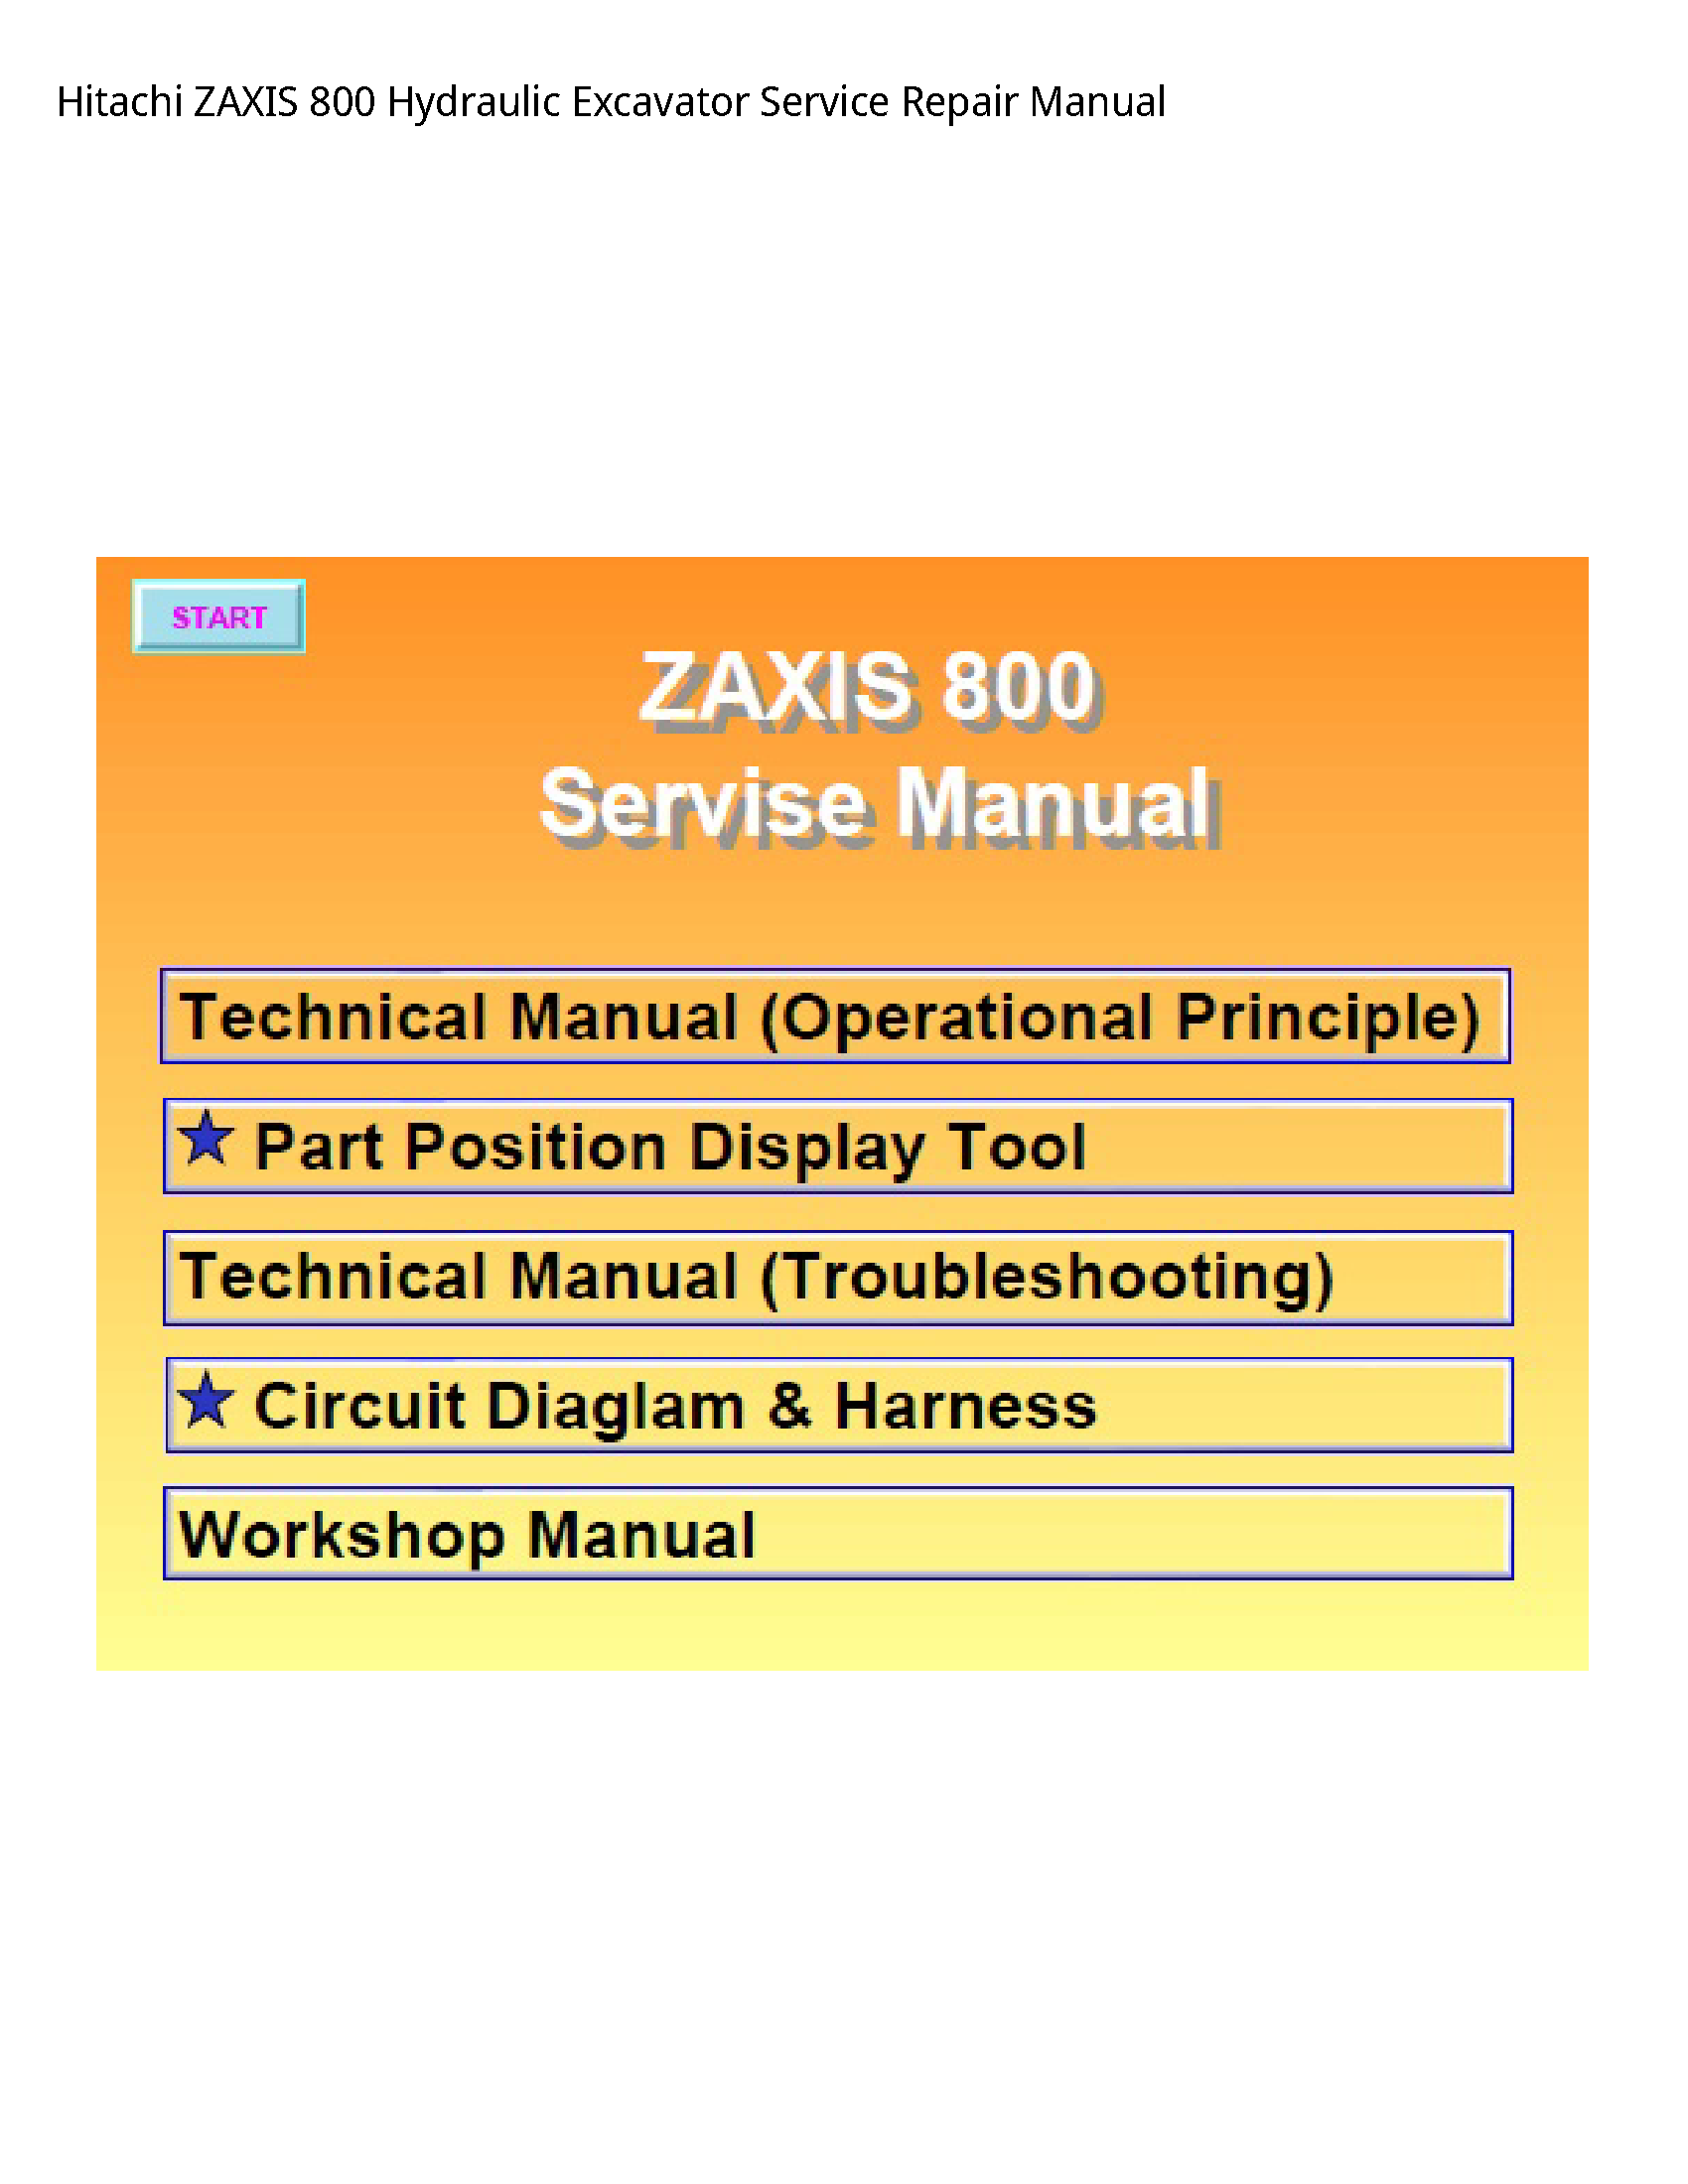 Hitachi 800 ZAXIS Hydraulic Excavator manual